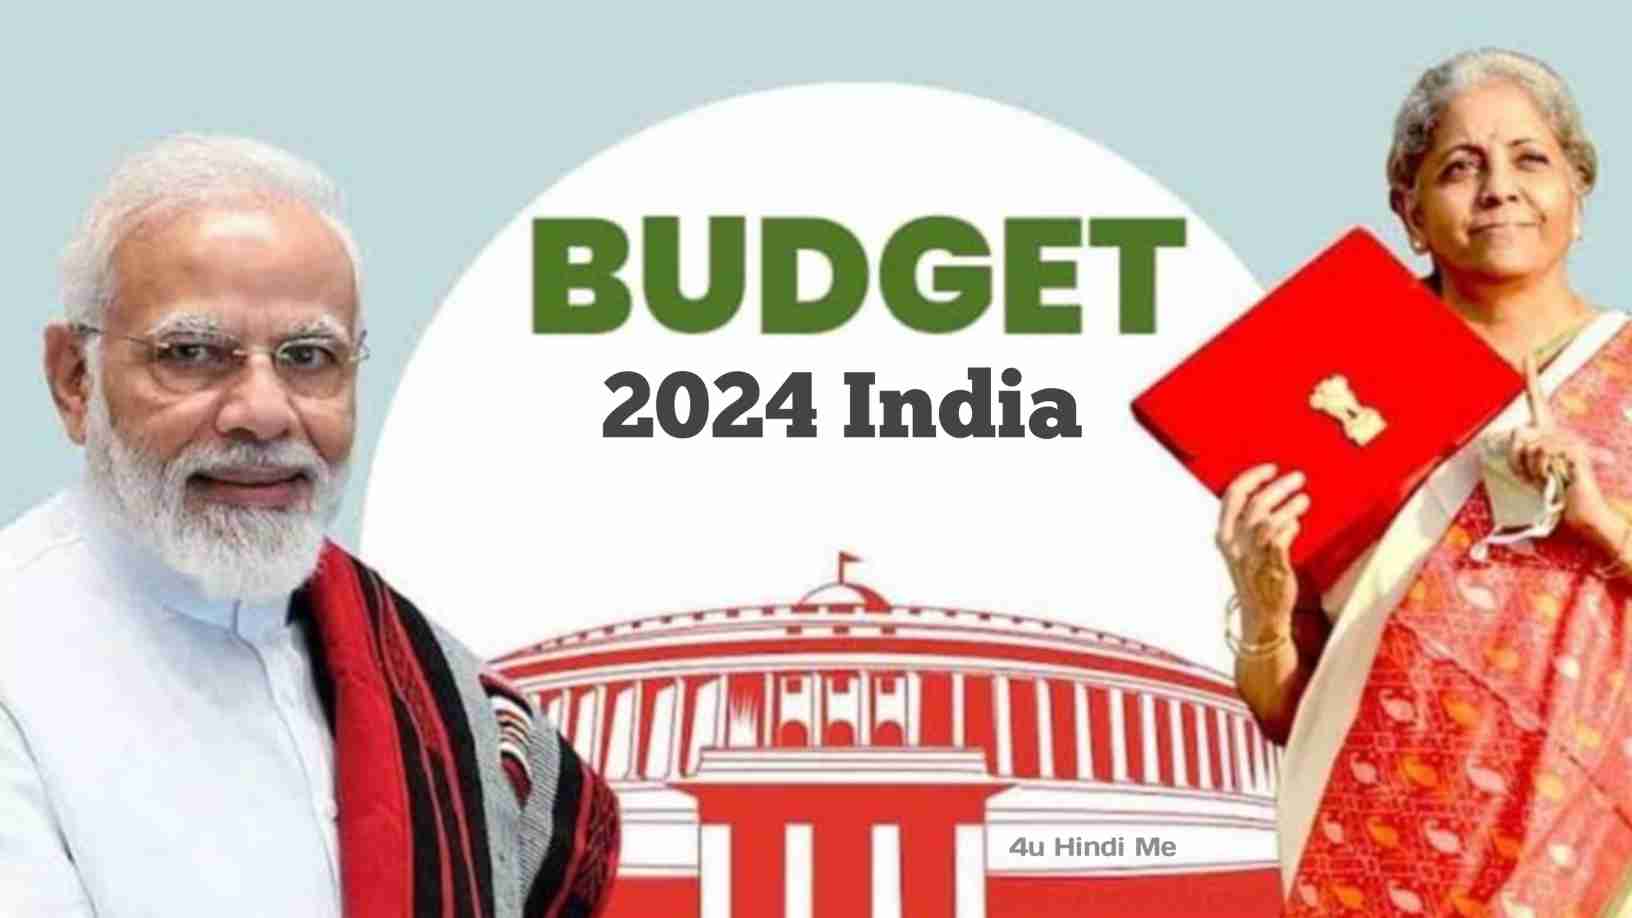 Budget 2024 India